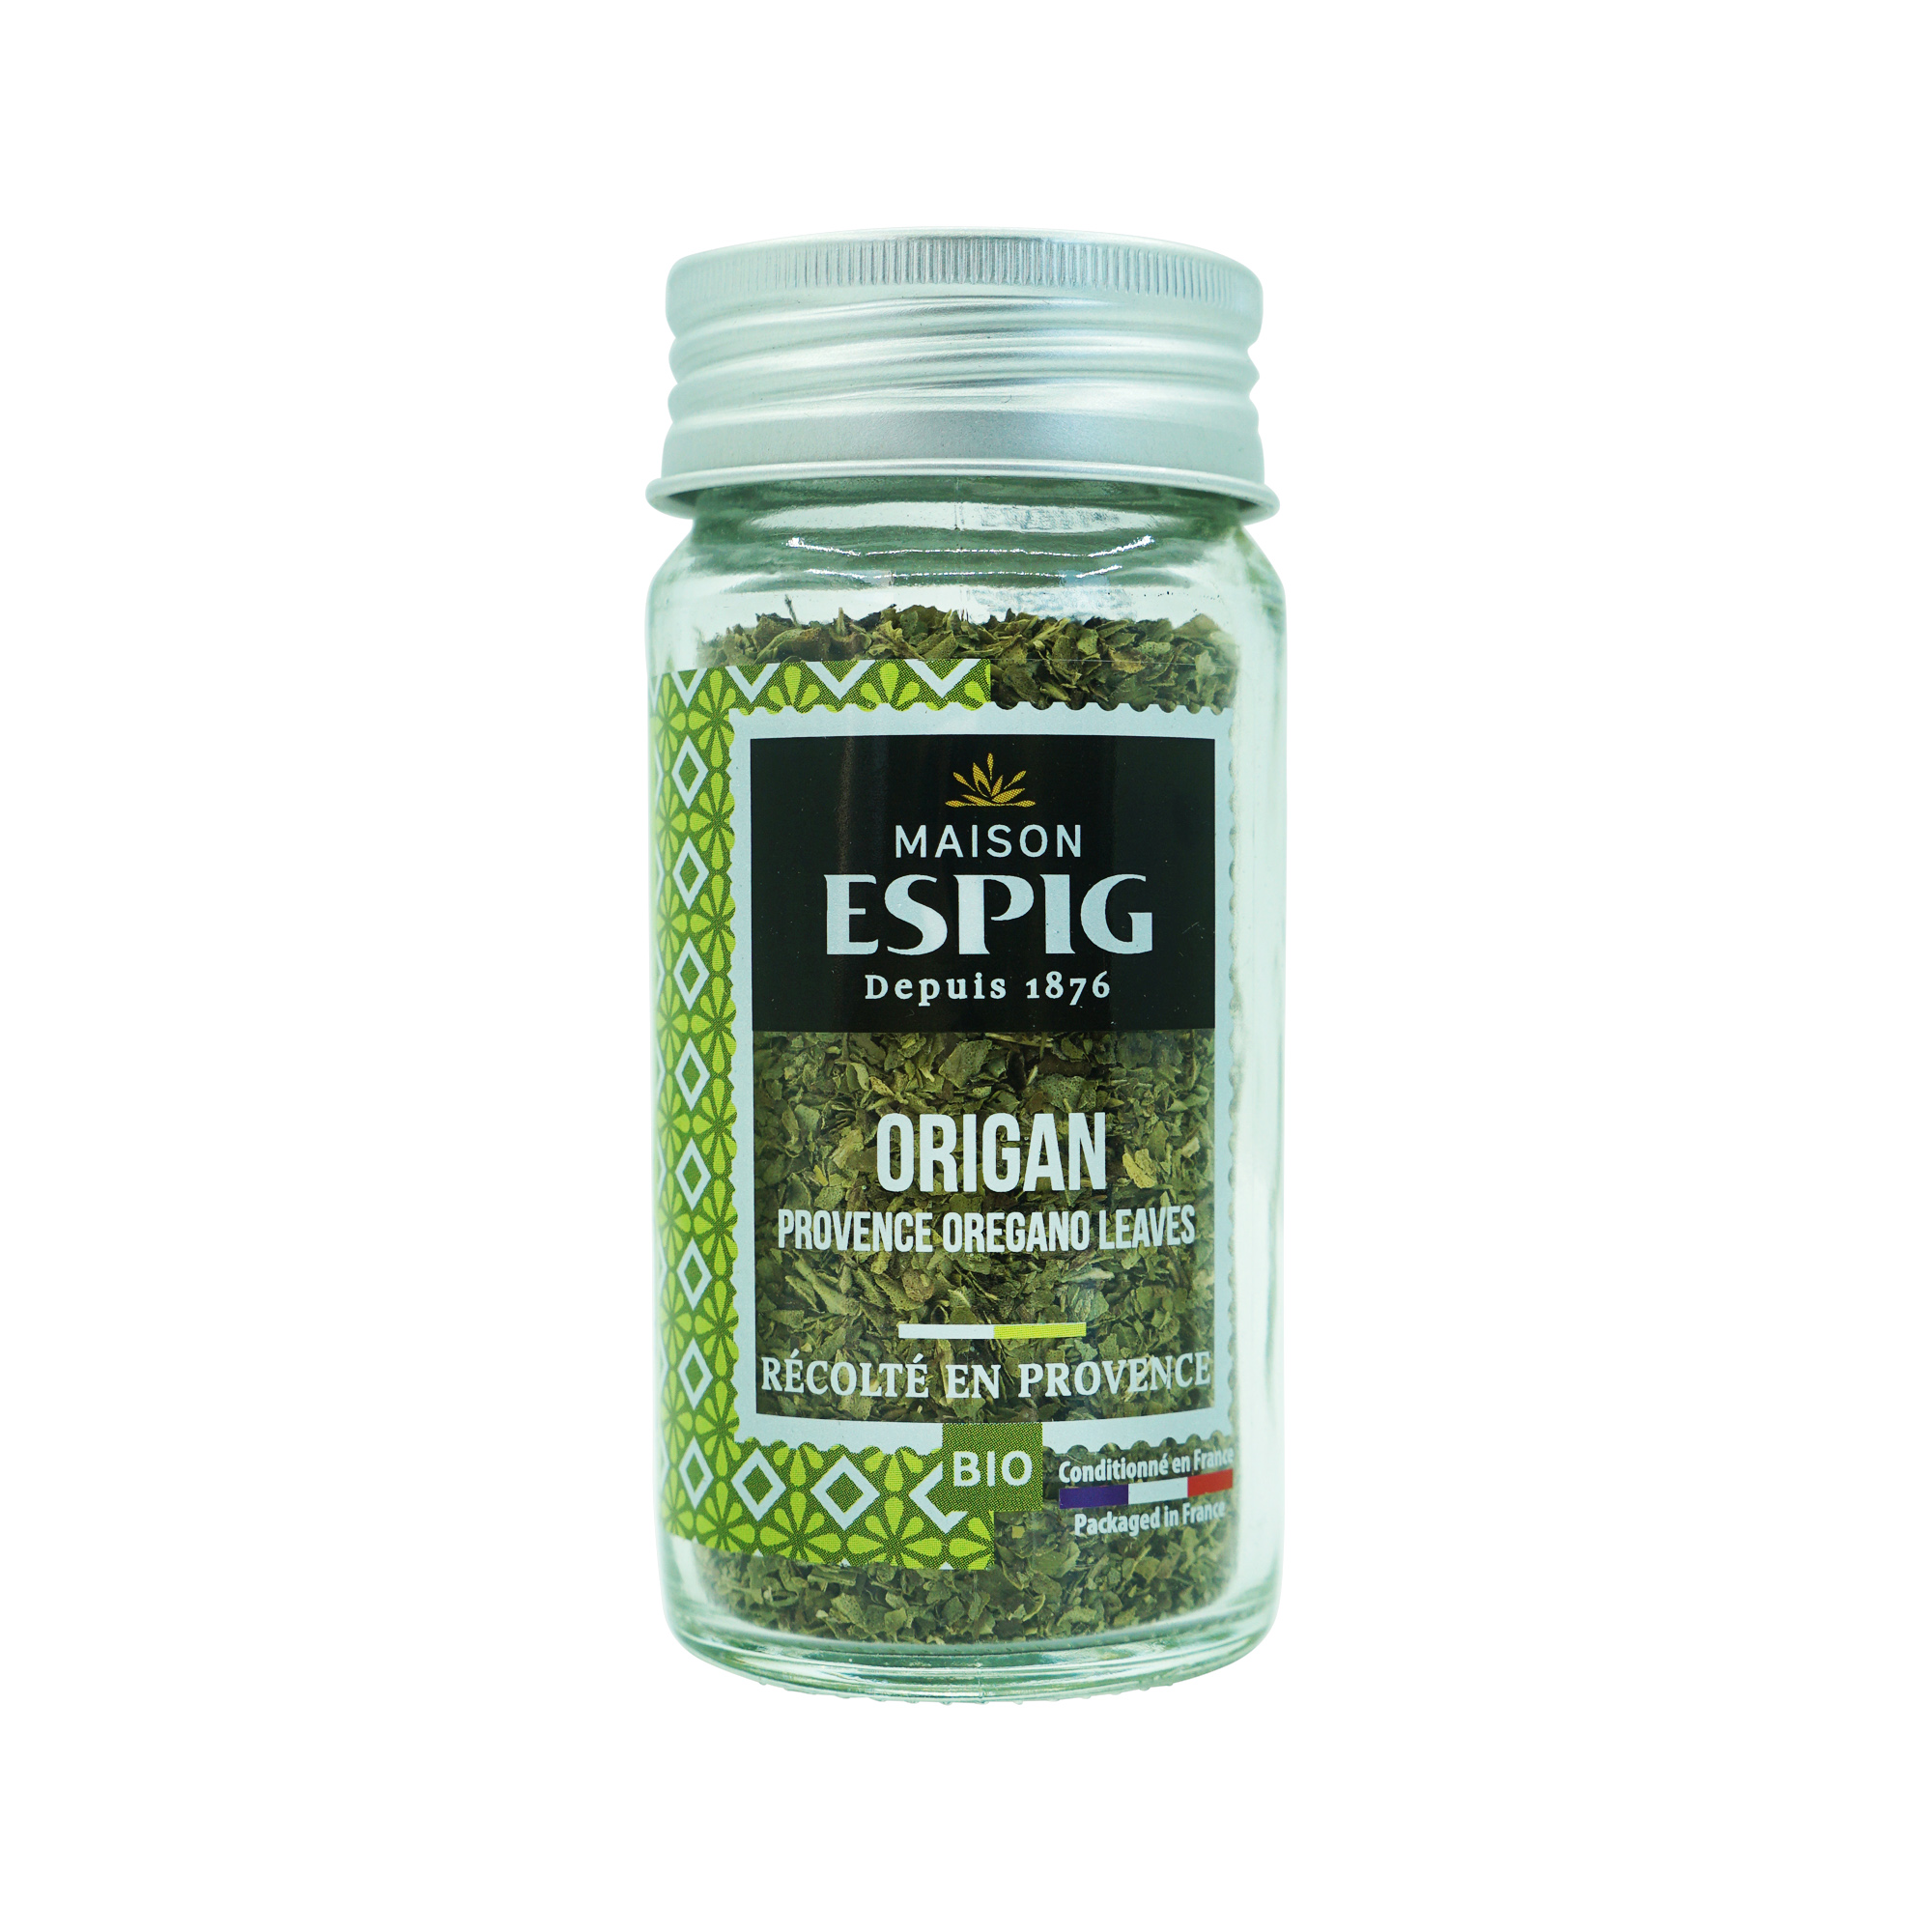 Maison Espig Organic Provence Oregano Leaves, Glass Jar 17g